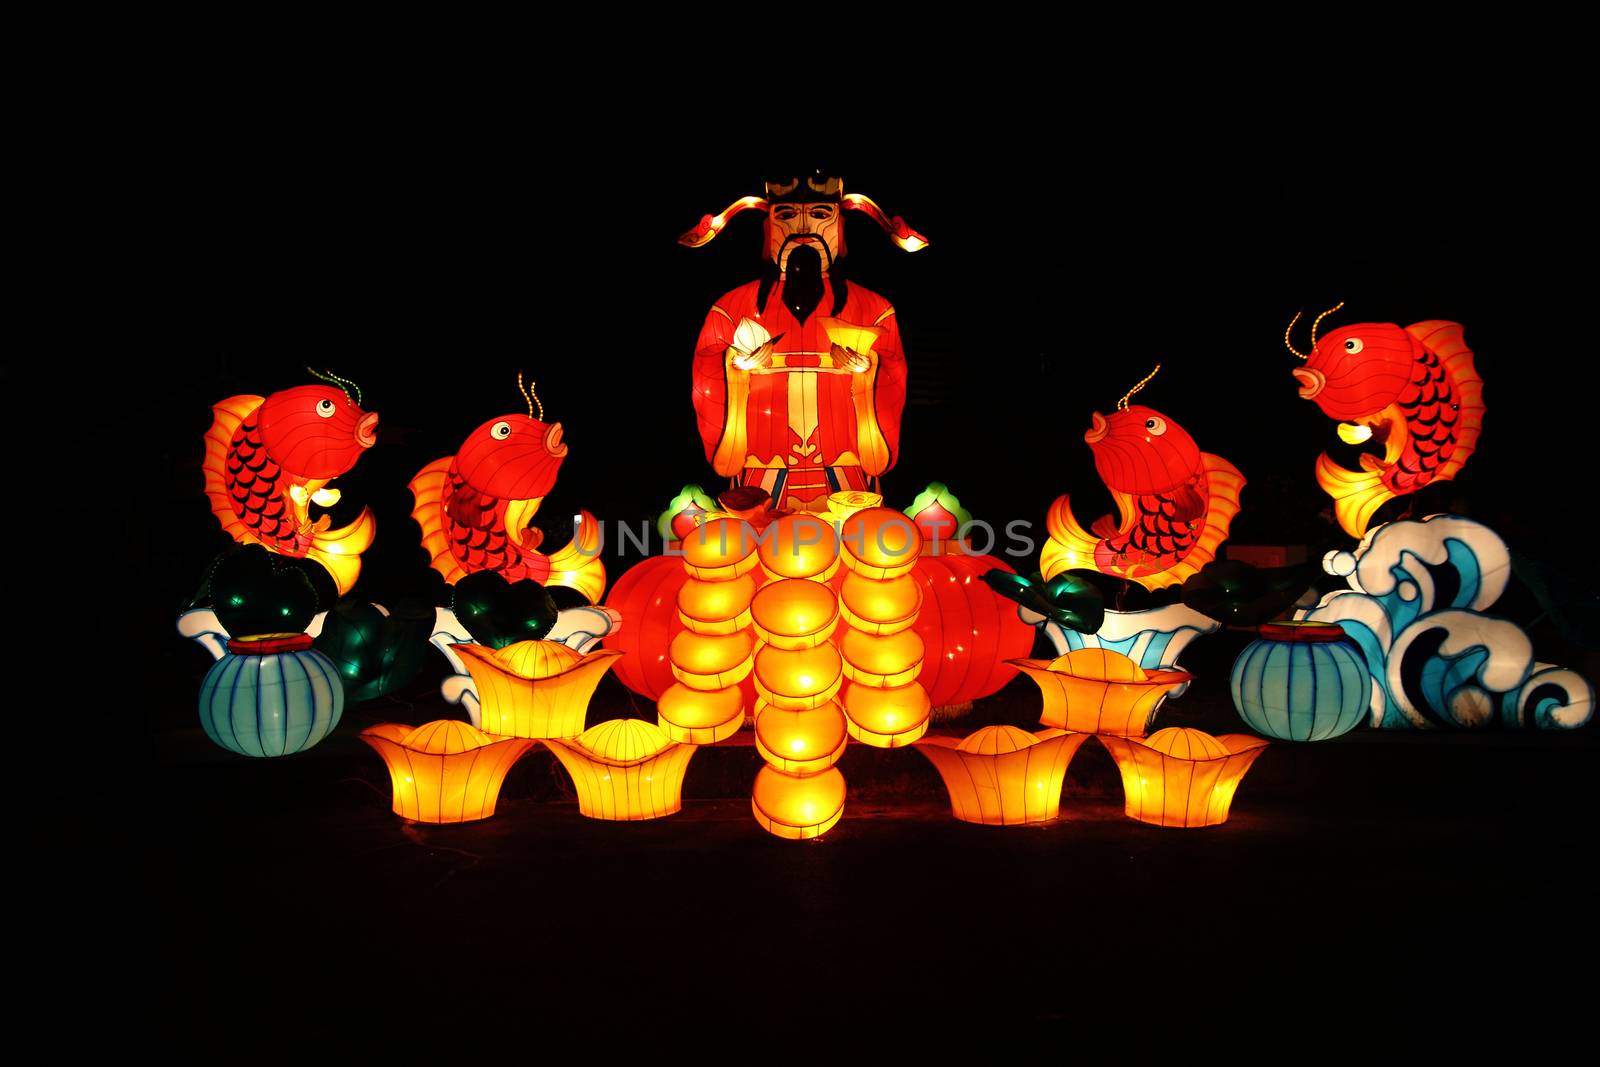 Chinese style lantern by wyoosumran